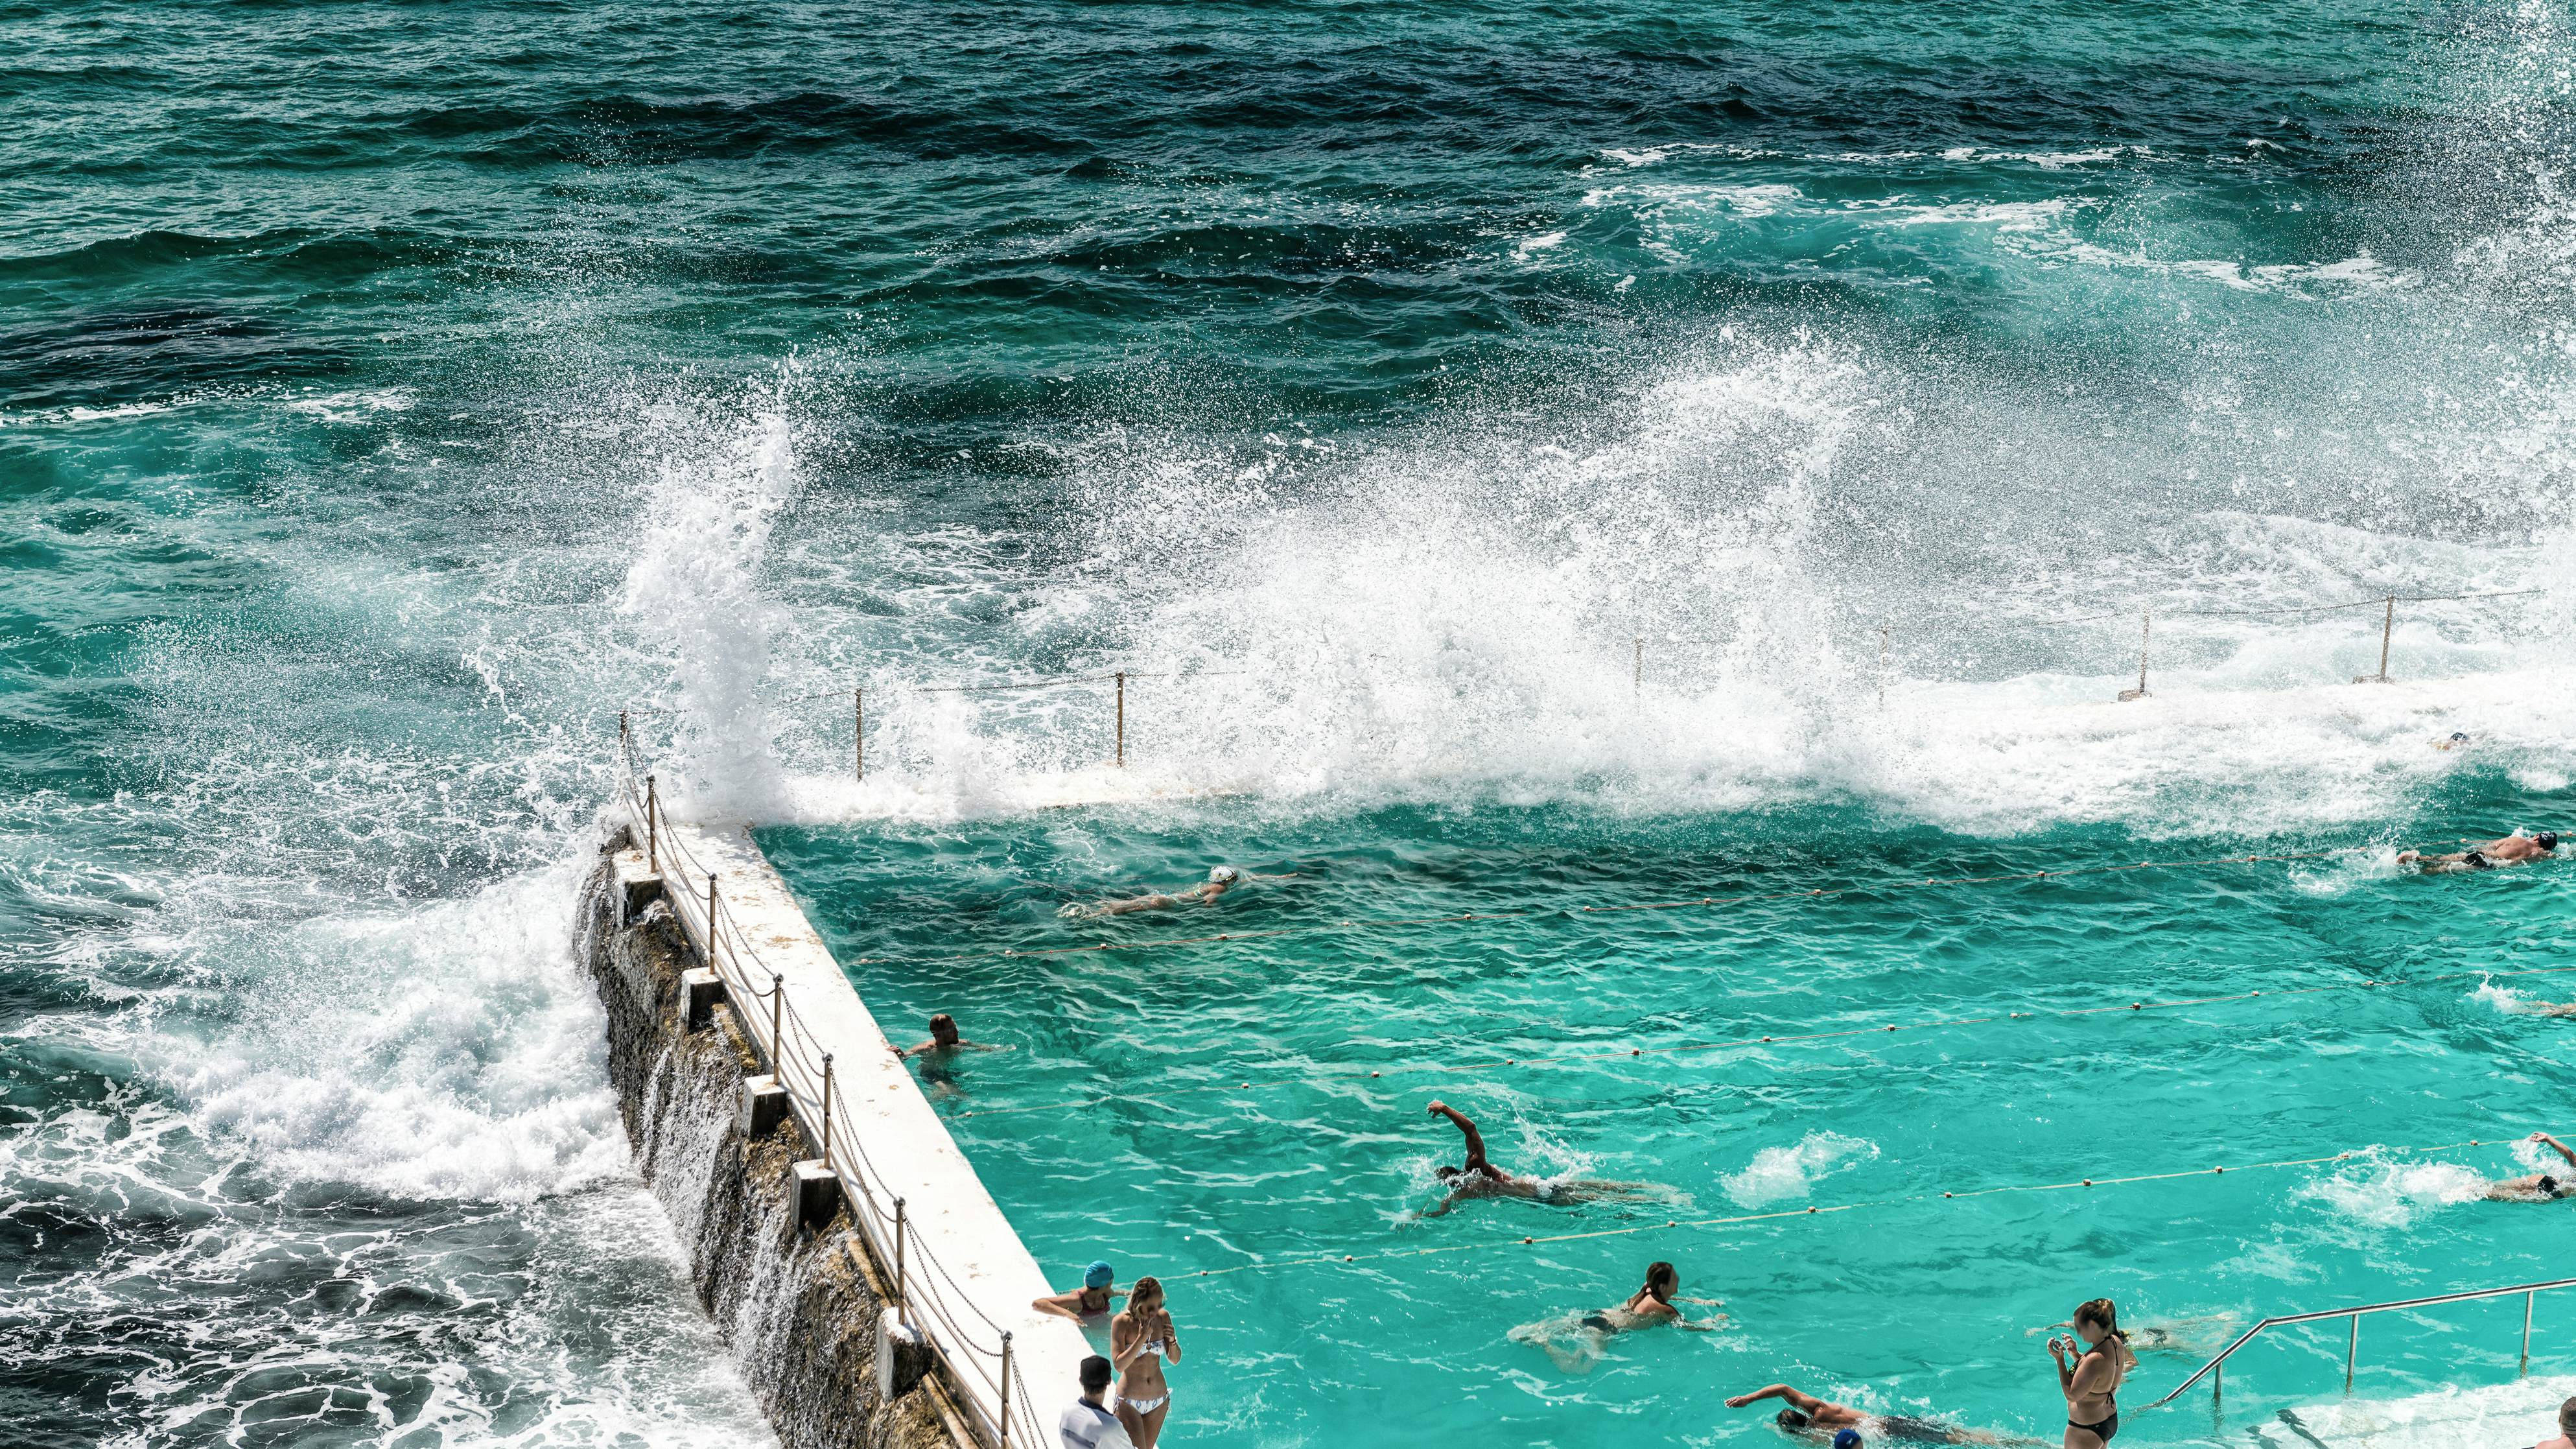 Beach Scene: Rock swimming pools on Pacific Ocean in Bondi, Sydney - Australia.